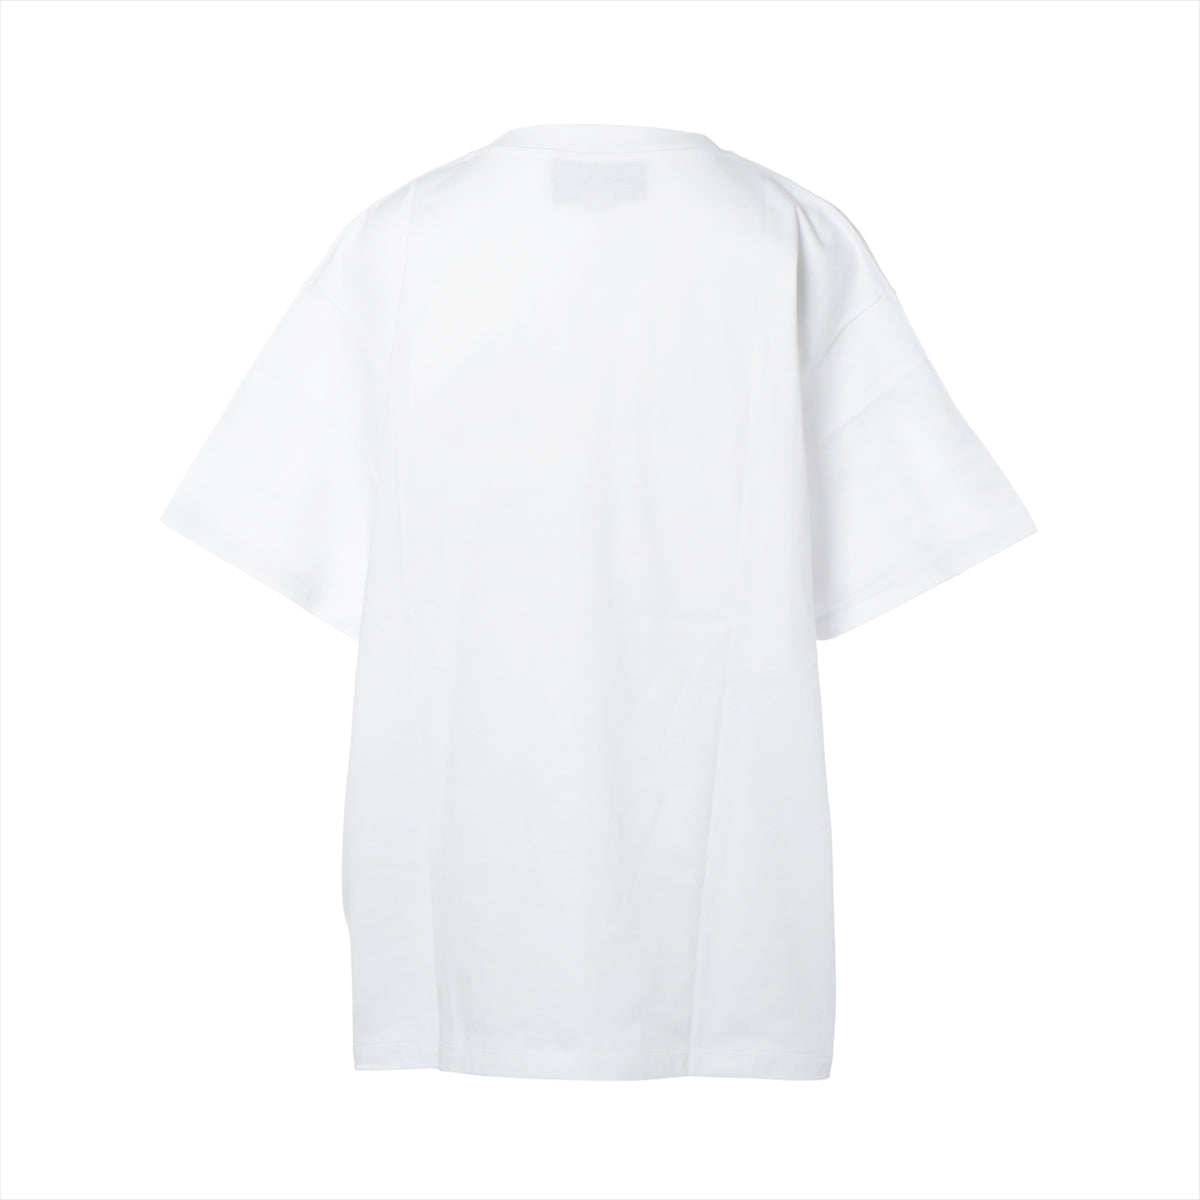 Gucci x adidas Cotton T-shirt M Ladies' White  723384